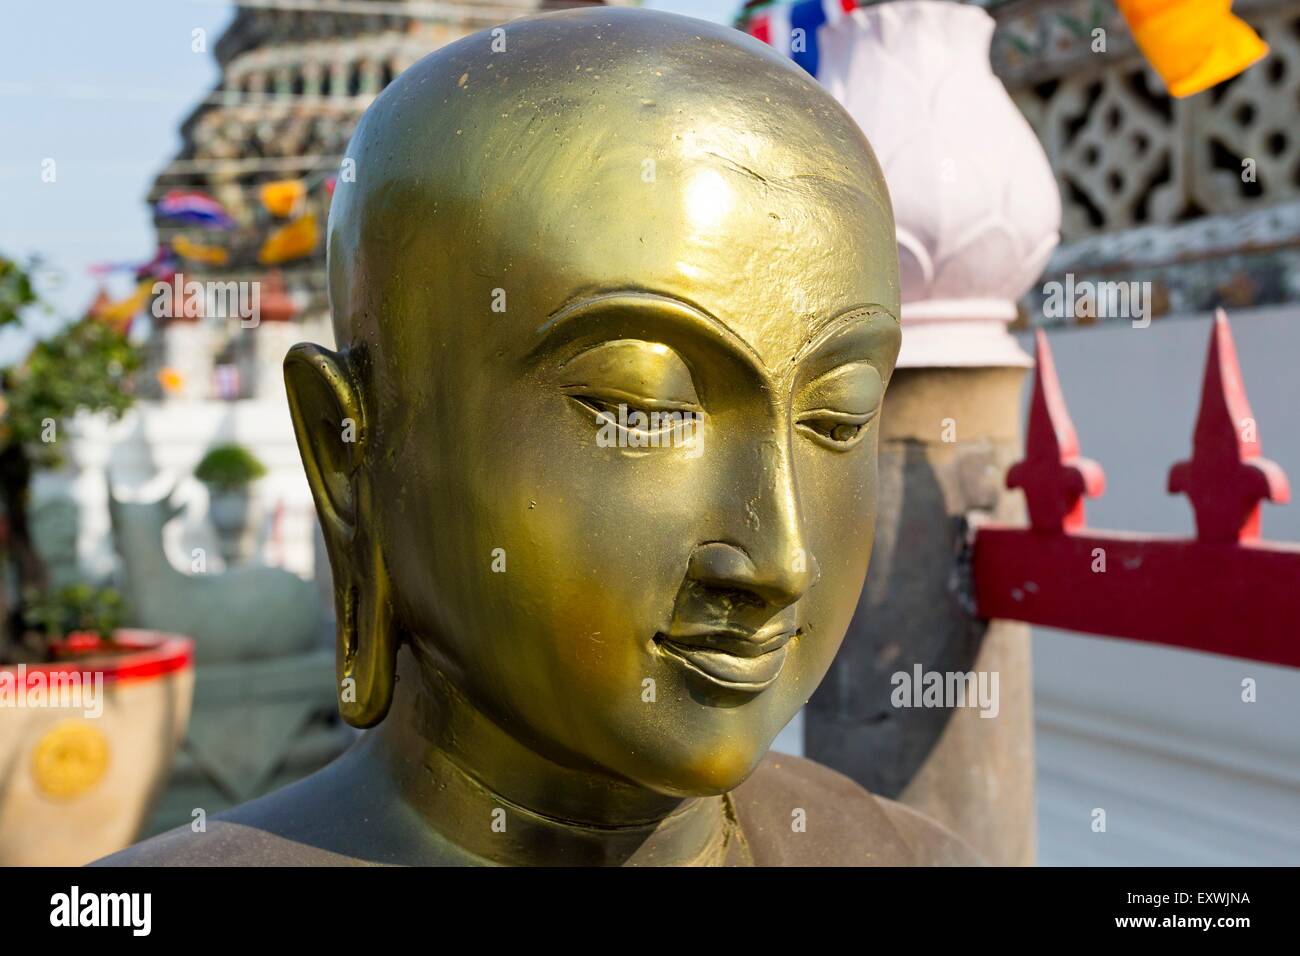 Statue, Wat Arun, Bangkok, Thailande, Asie Banque D'Images